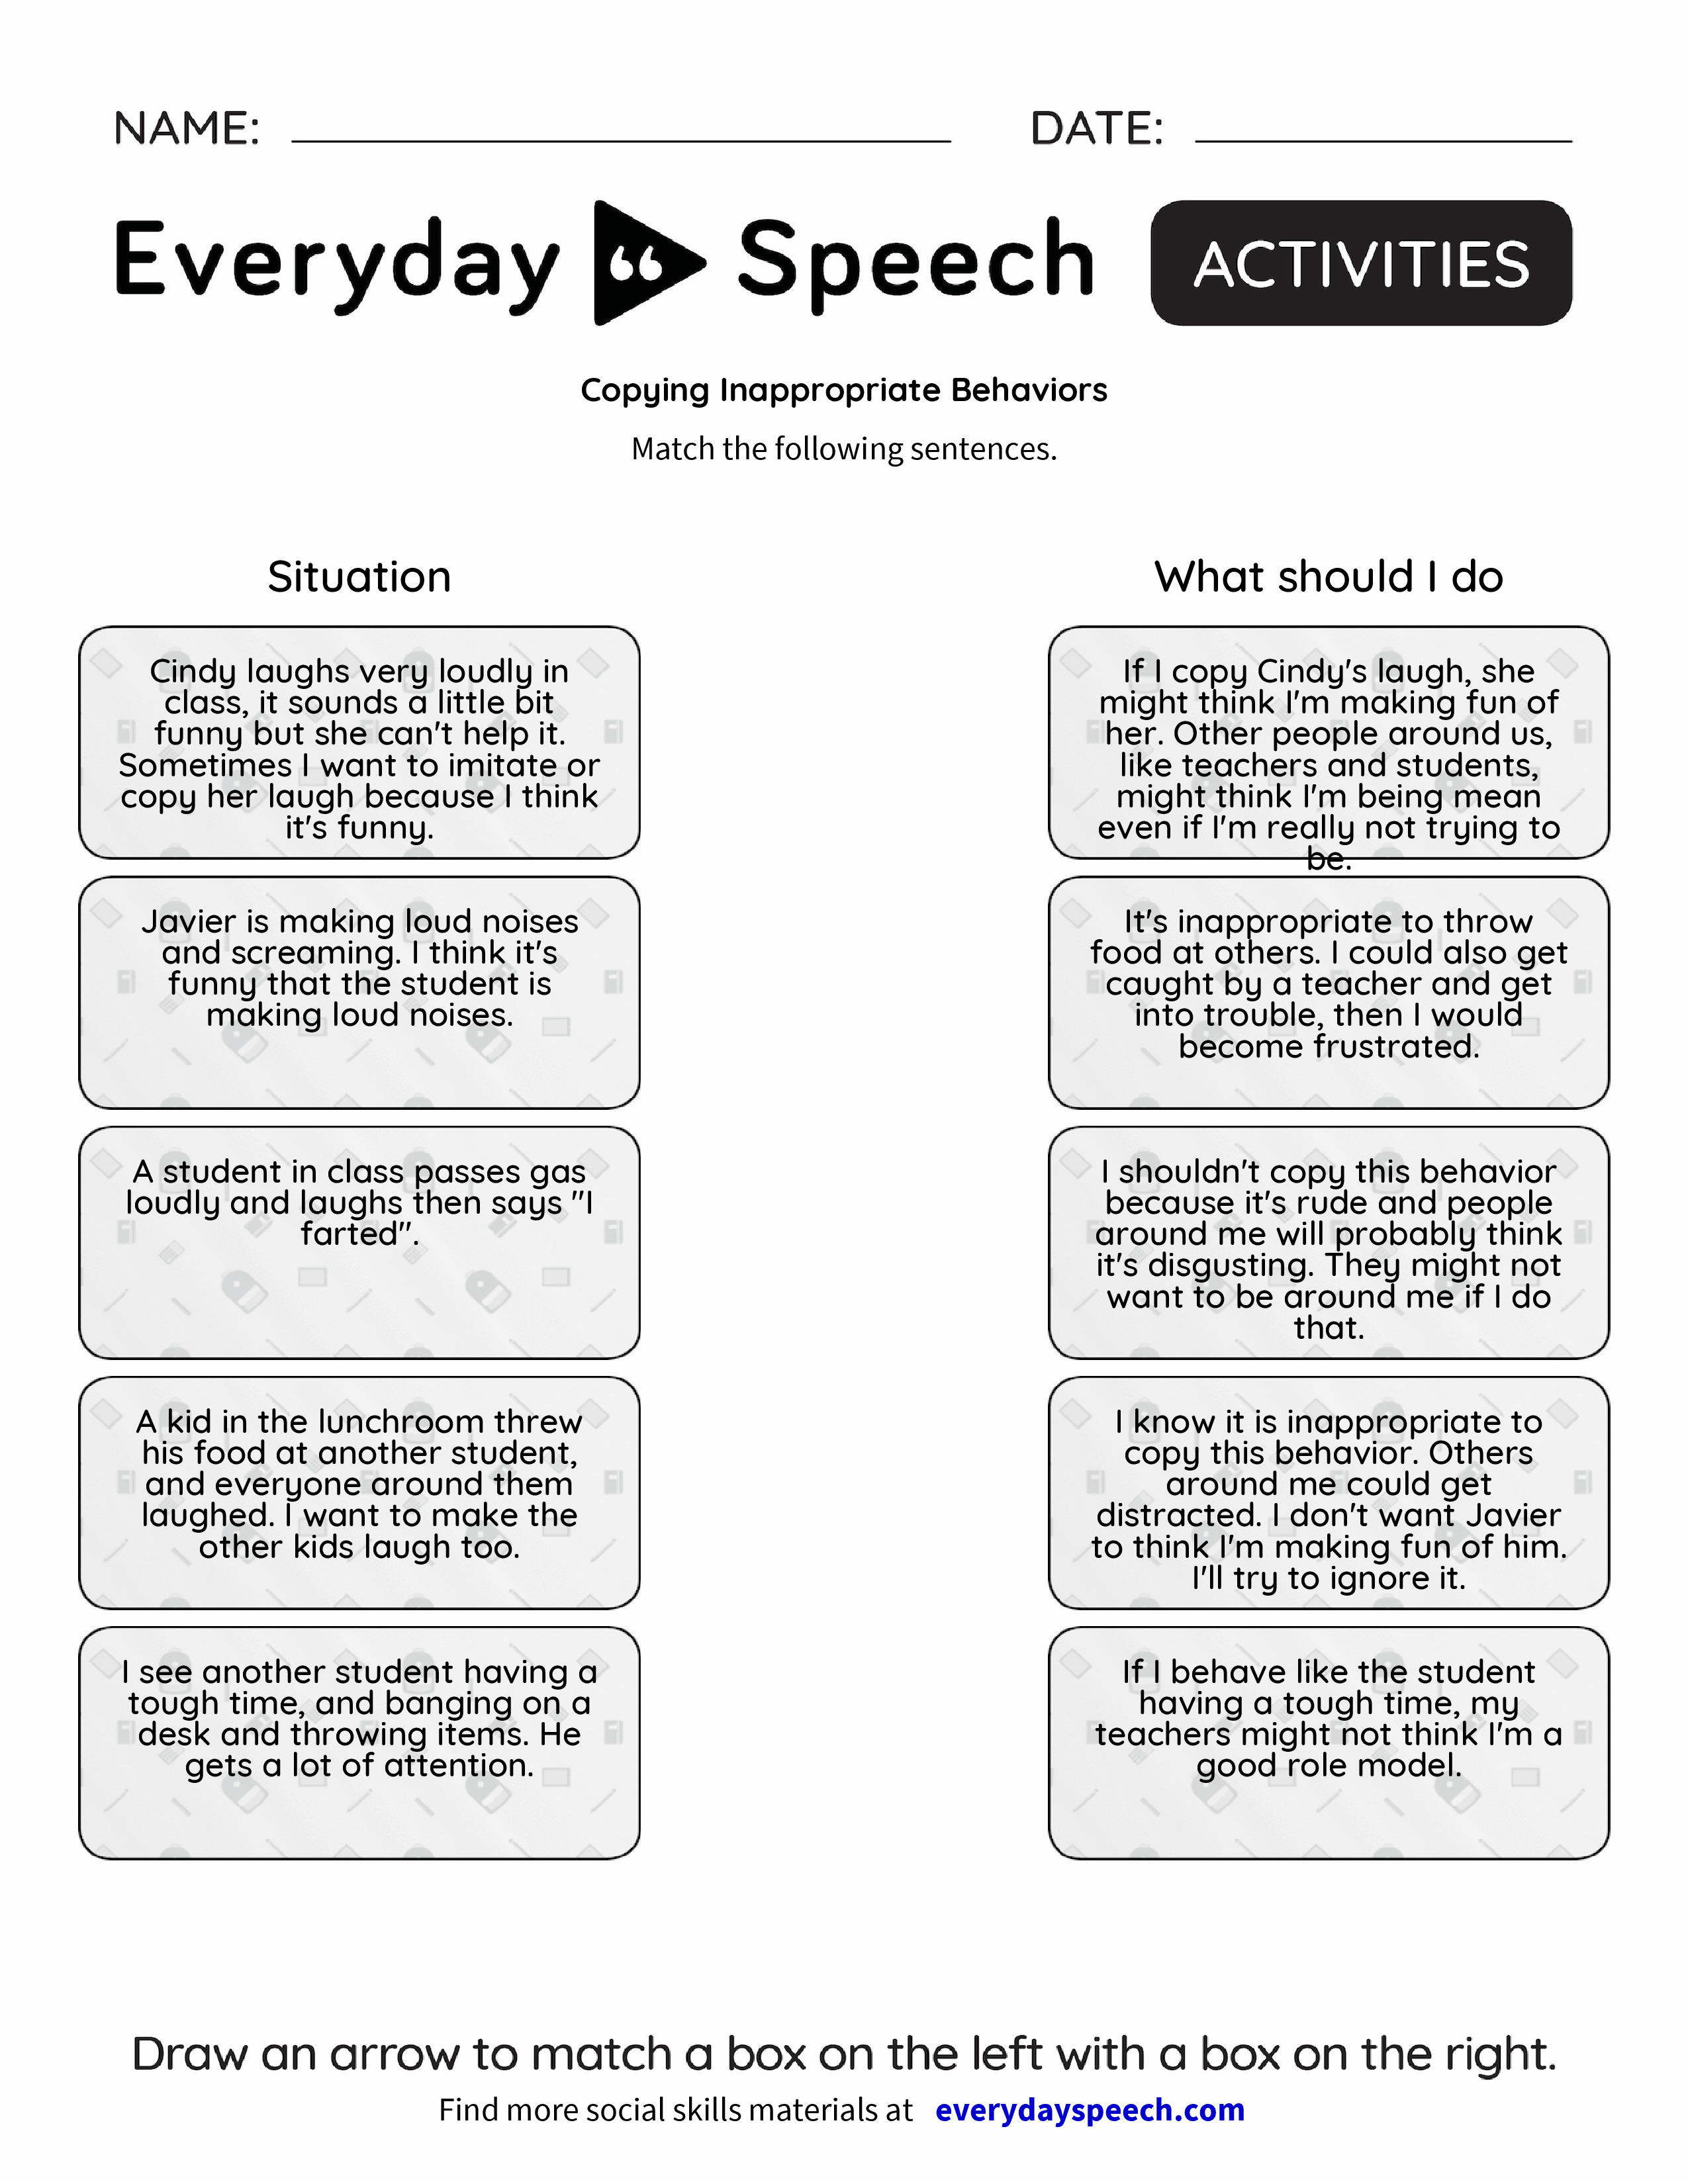 how to laugh everyday speech